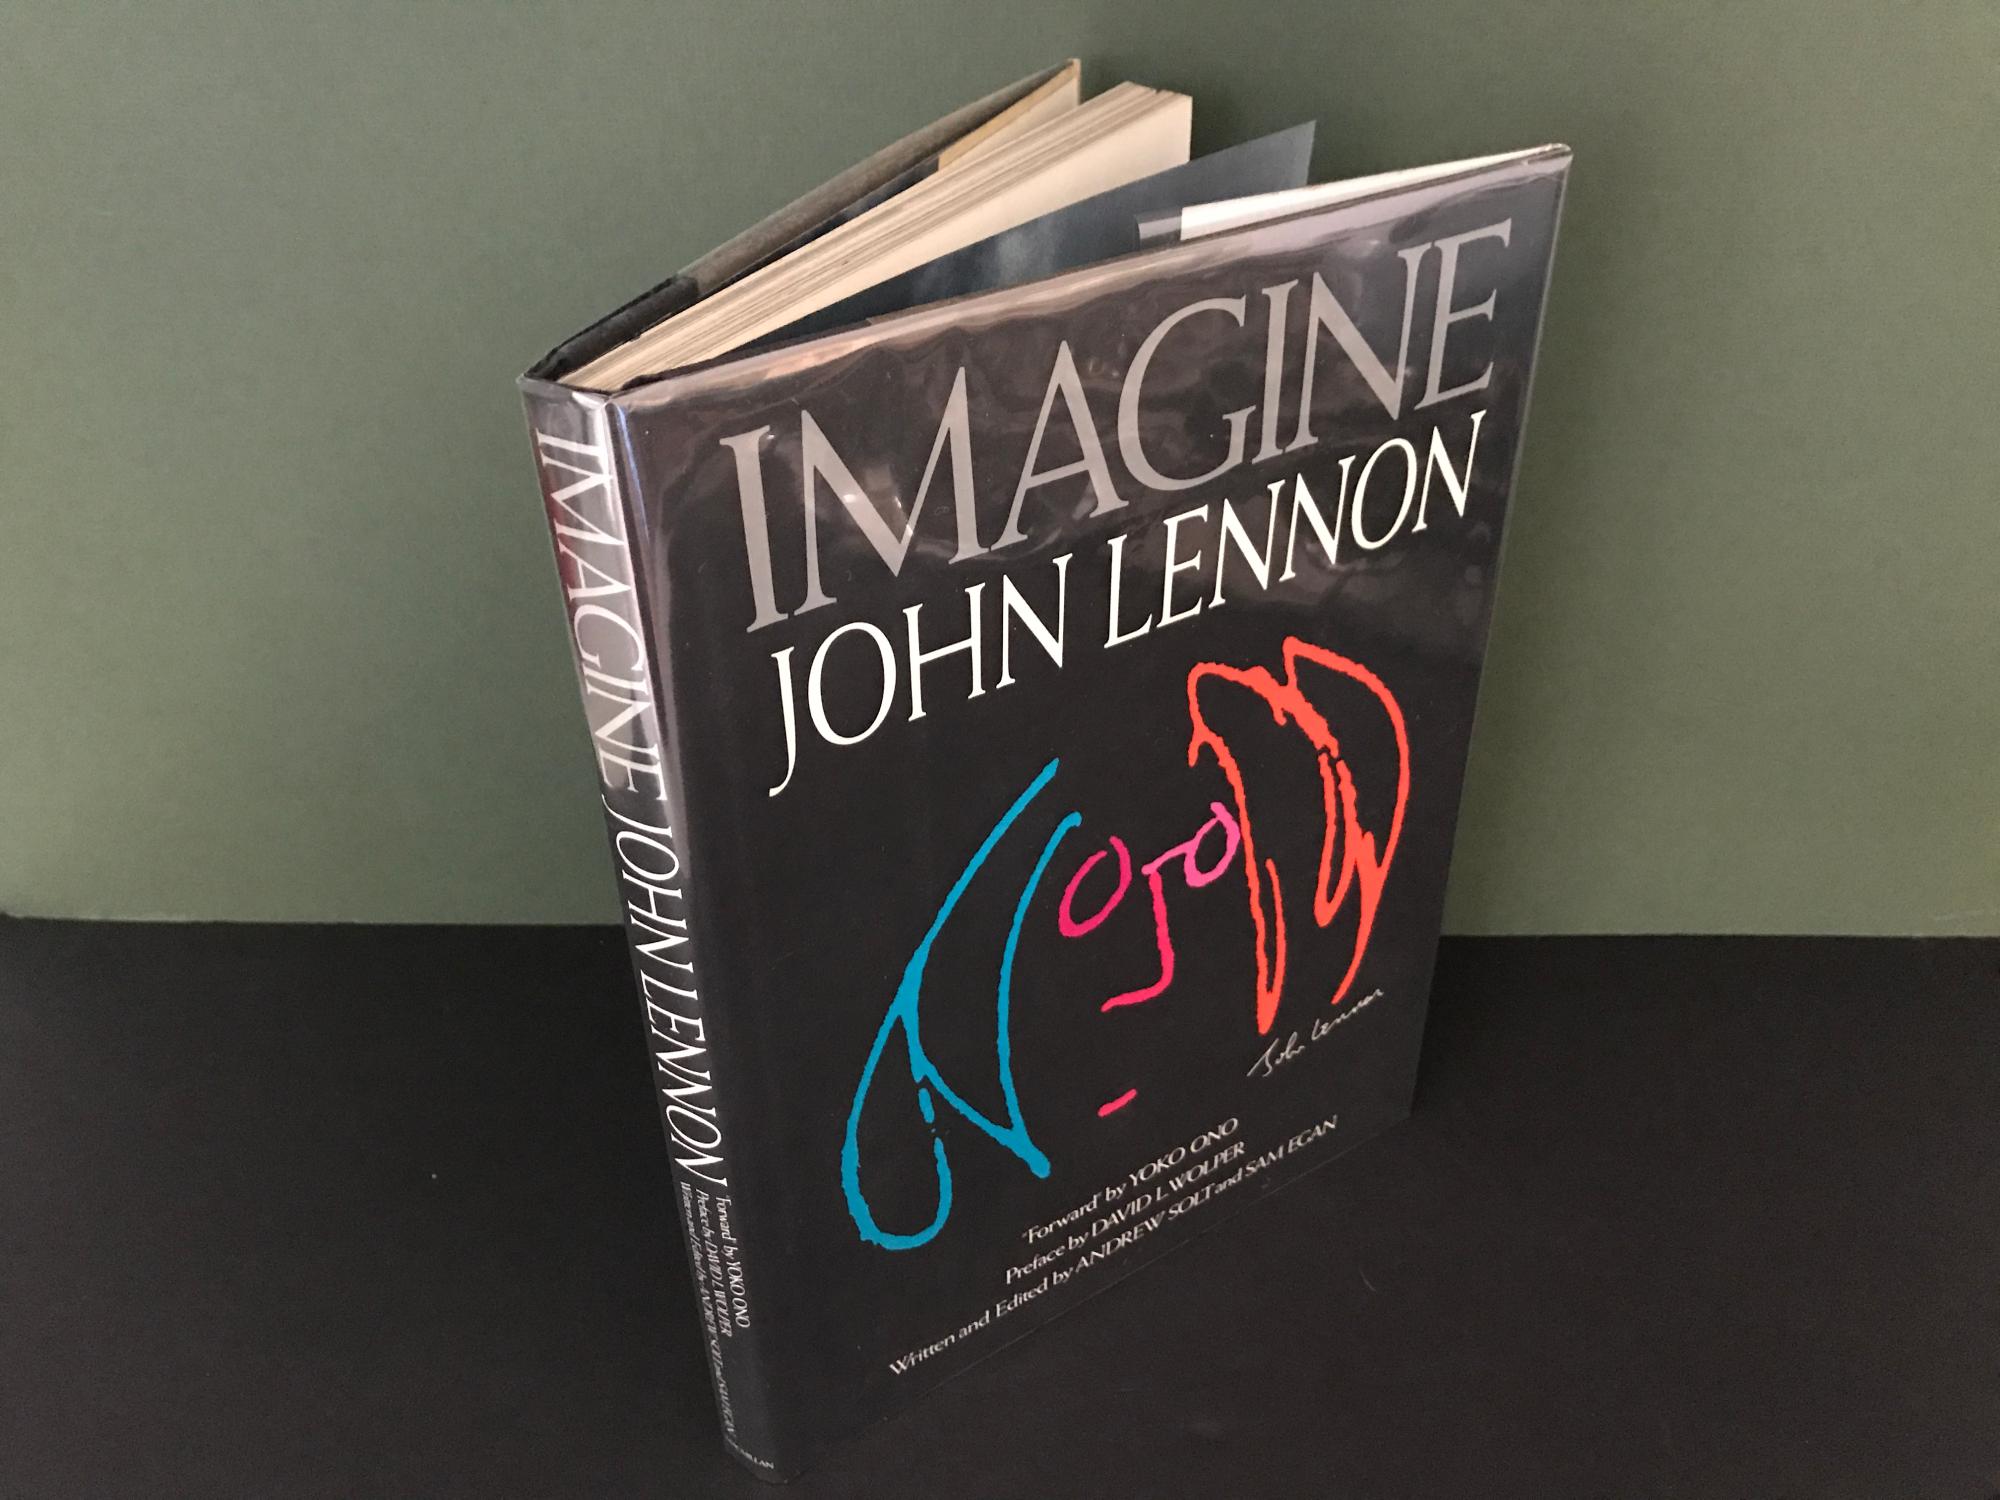 Джон леннон книги. Memories of John Lennon книга. Book imagine.